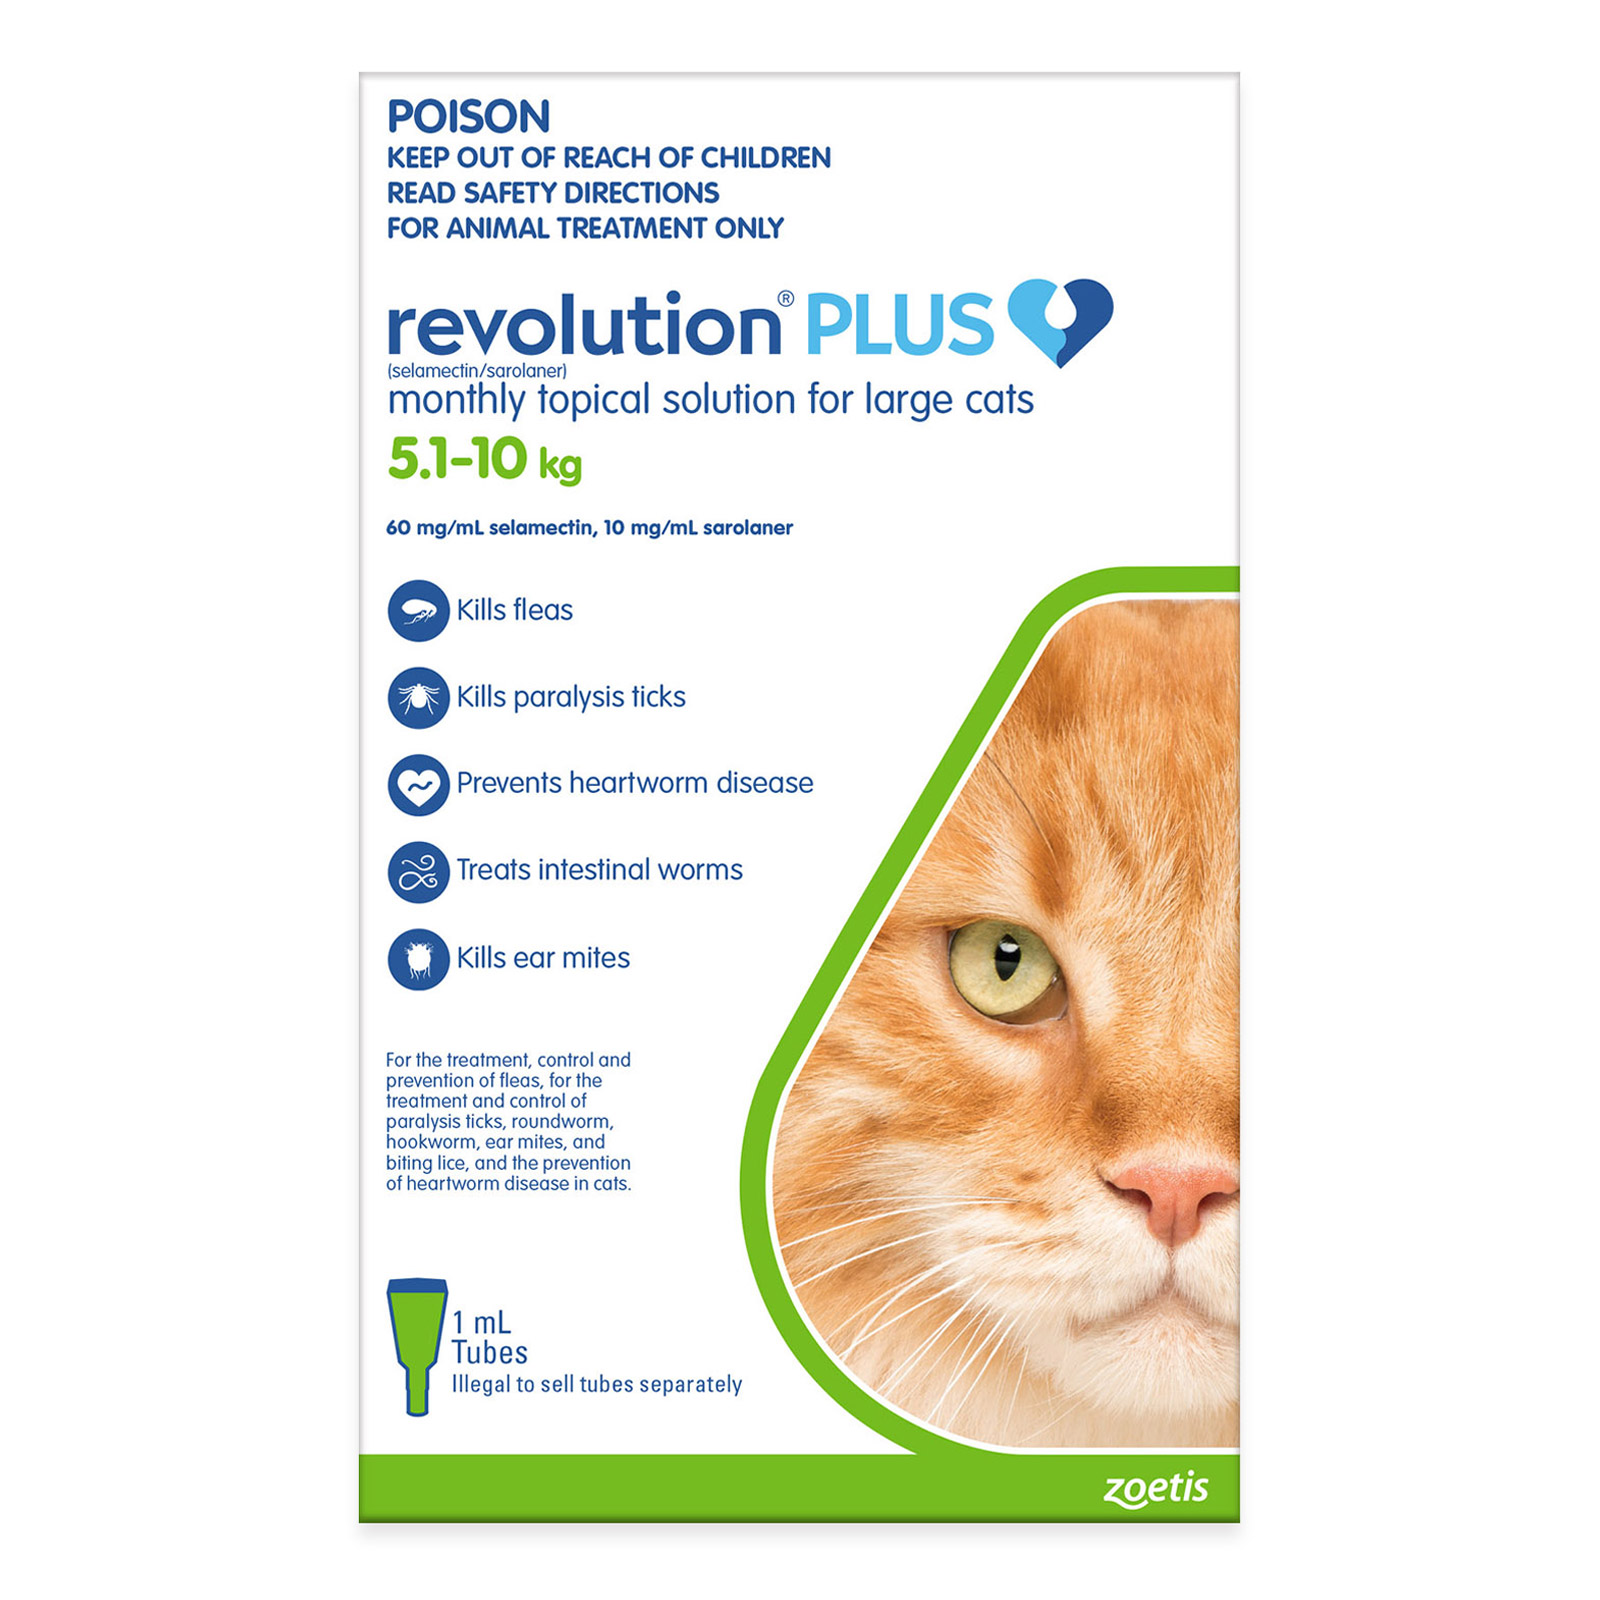 revolution-plus-for-cats-zoetis-revolution-for-cats-online